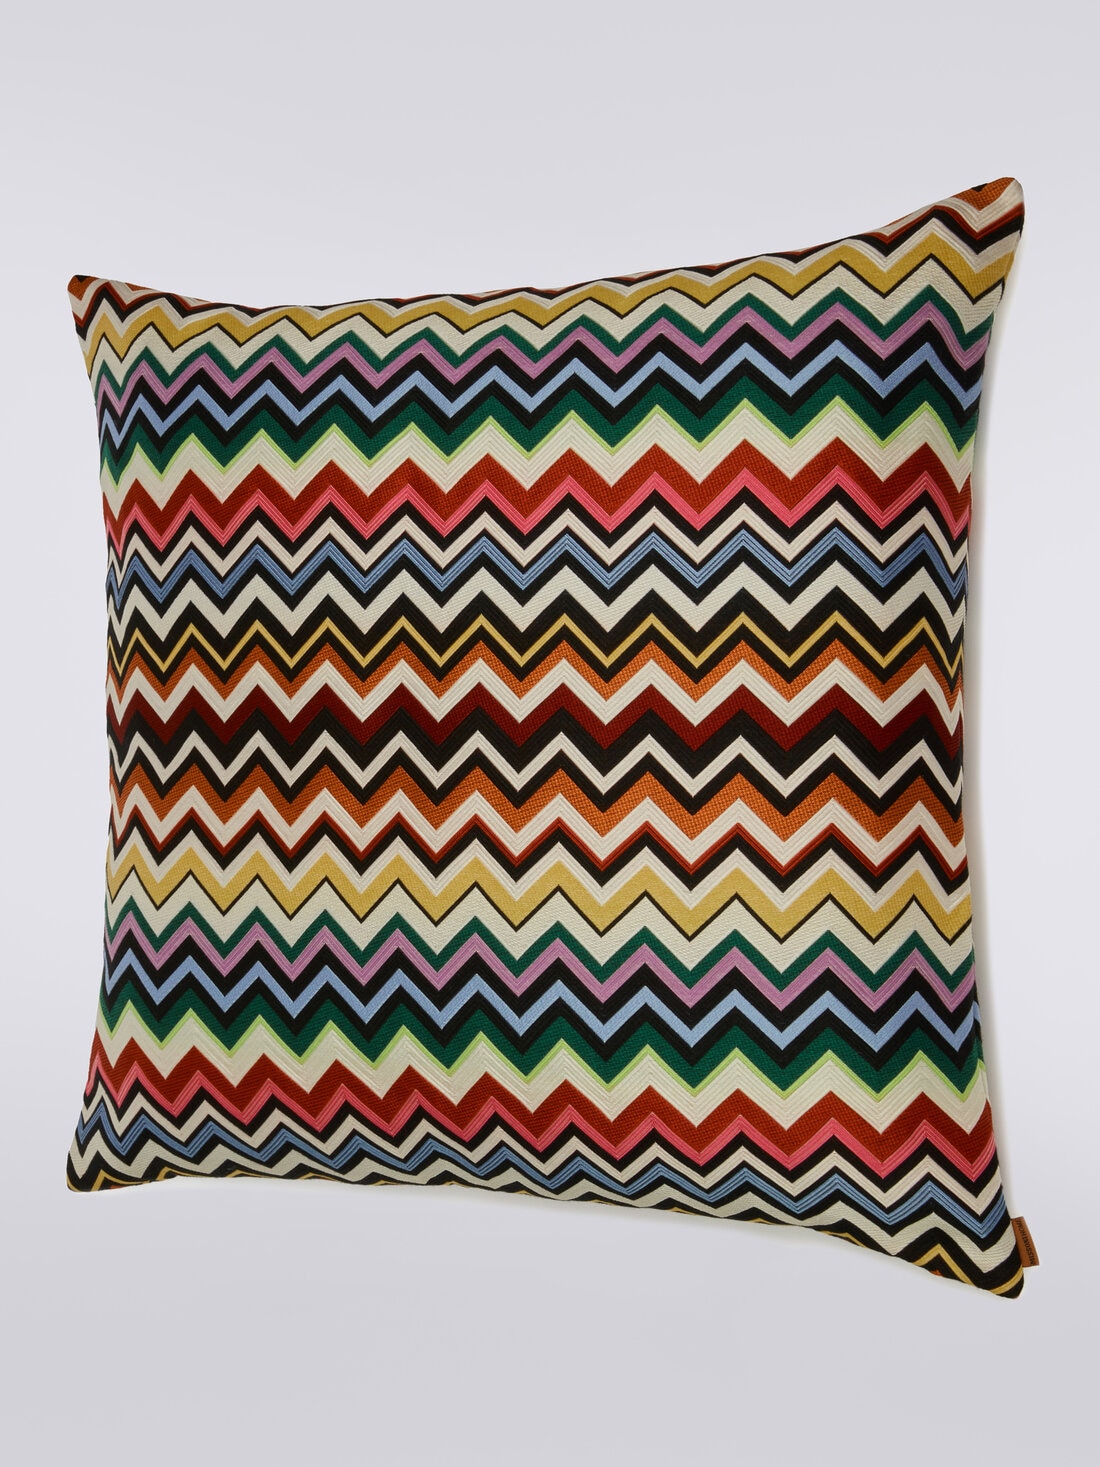 Belfast cushion 60x60 cm, Multicoloured  - 8051275581574 - 1